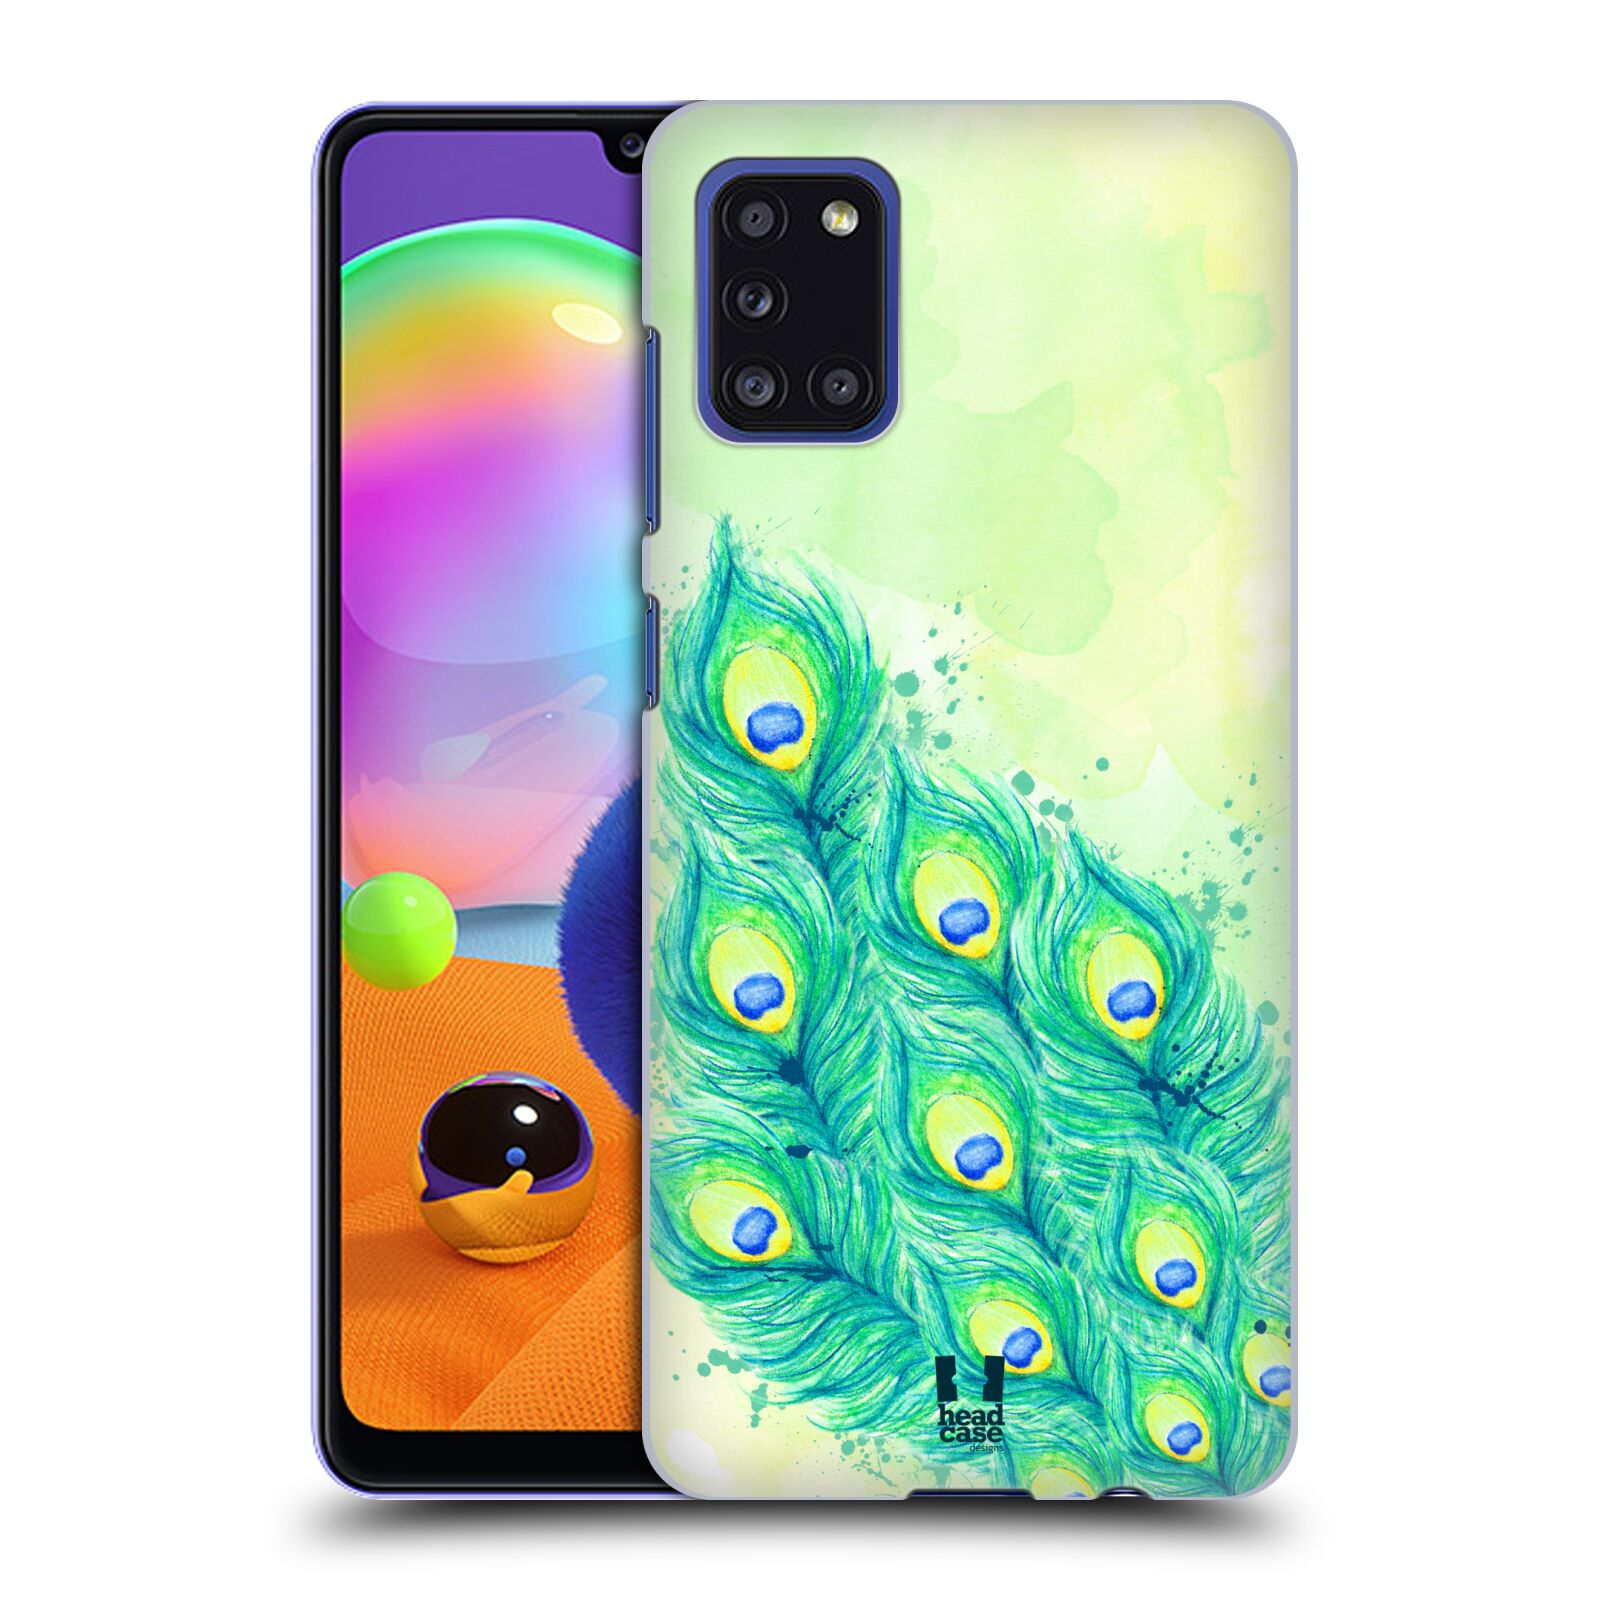 Zadní kryt na mobil Samsung Galaxy A31 vzor Paví pírka barevná MODRÁ A ZELENÁ